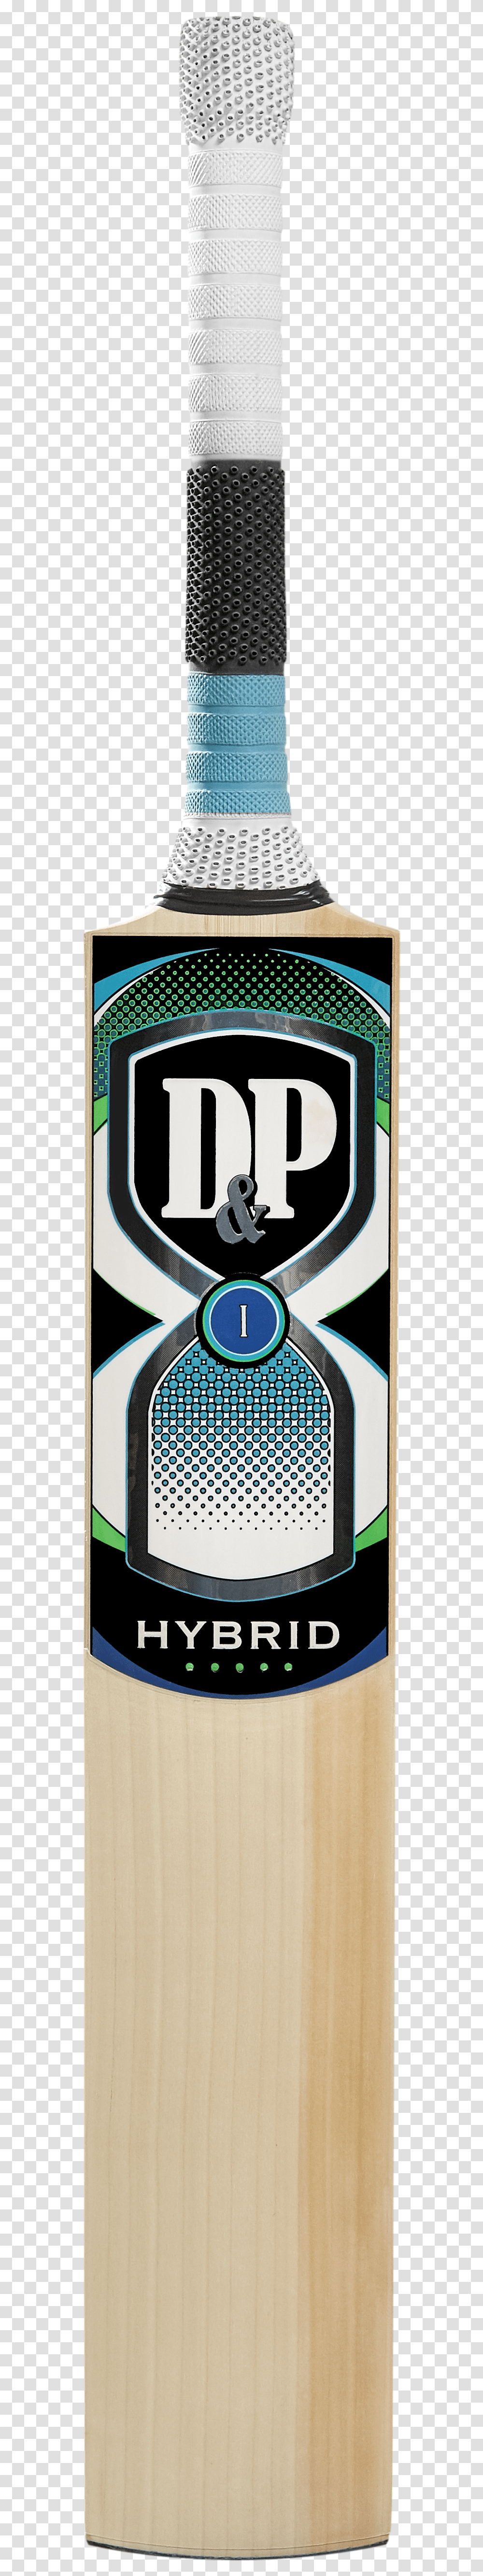 Bat Hybrid I Dp New Hybrid, Logo, Trademark, Emblem Transparent Png